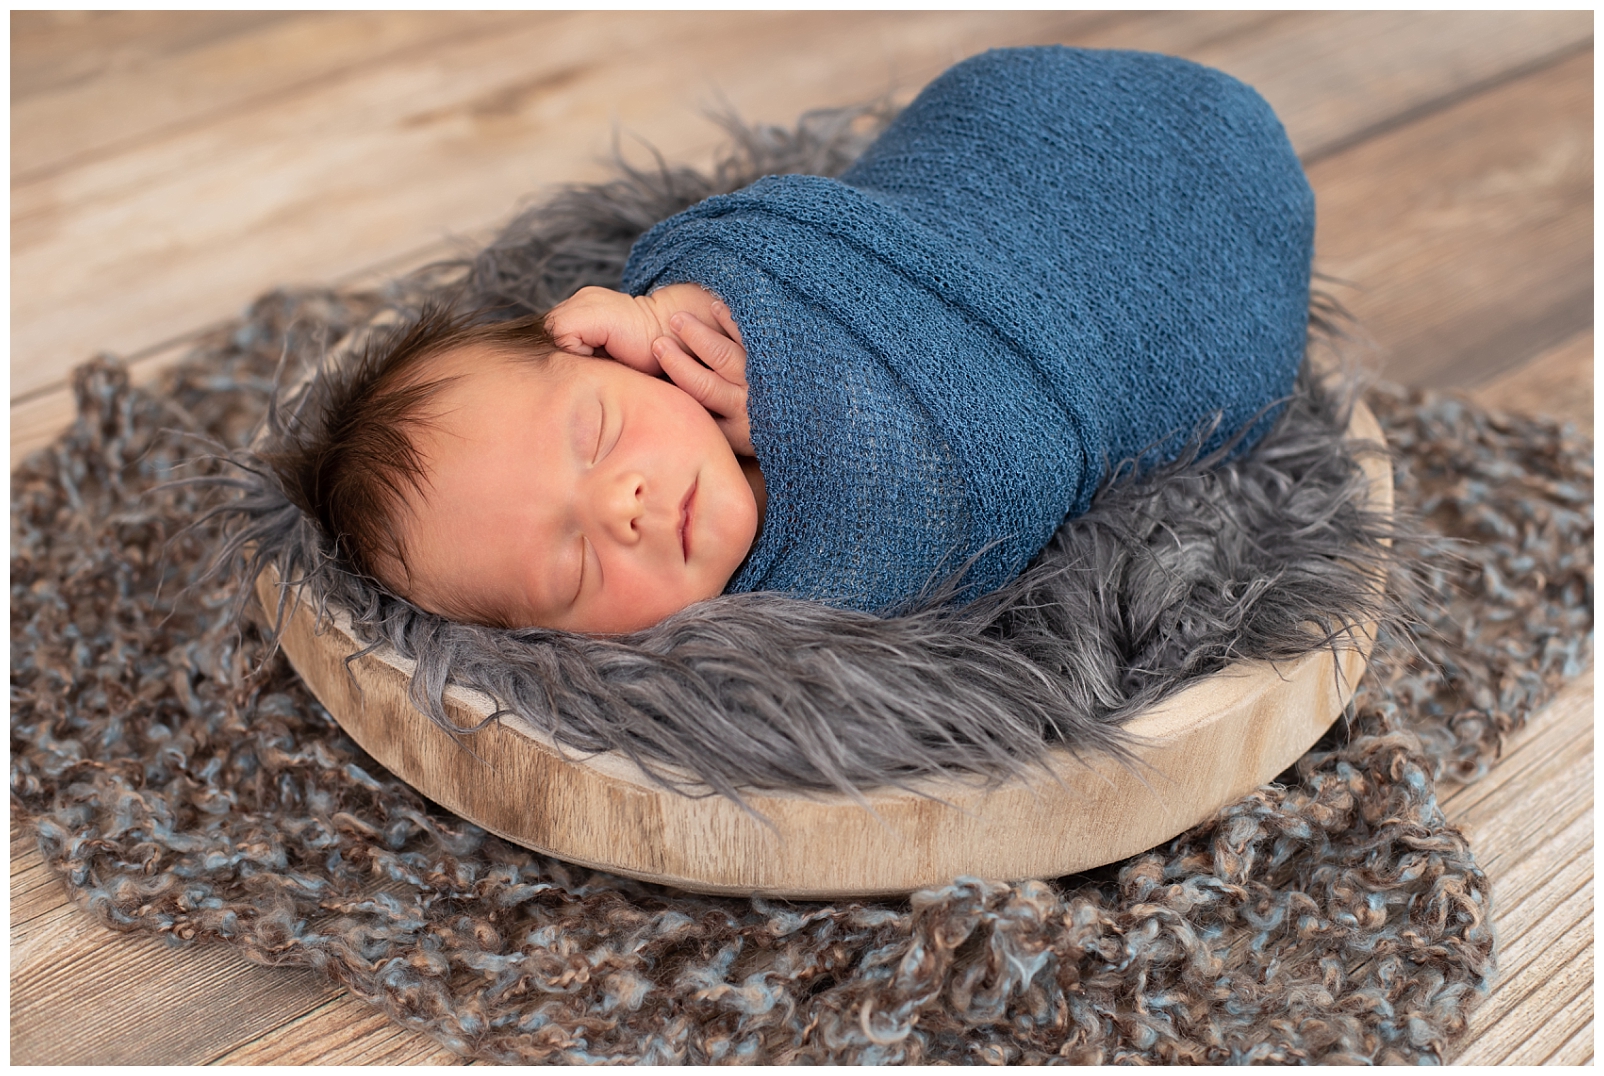 newborn sleeping in wrap on fur in a wooden bowl